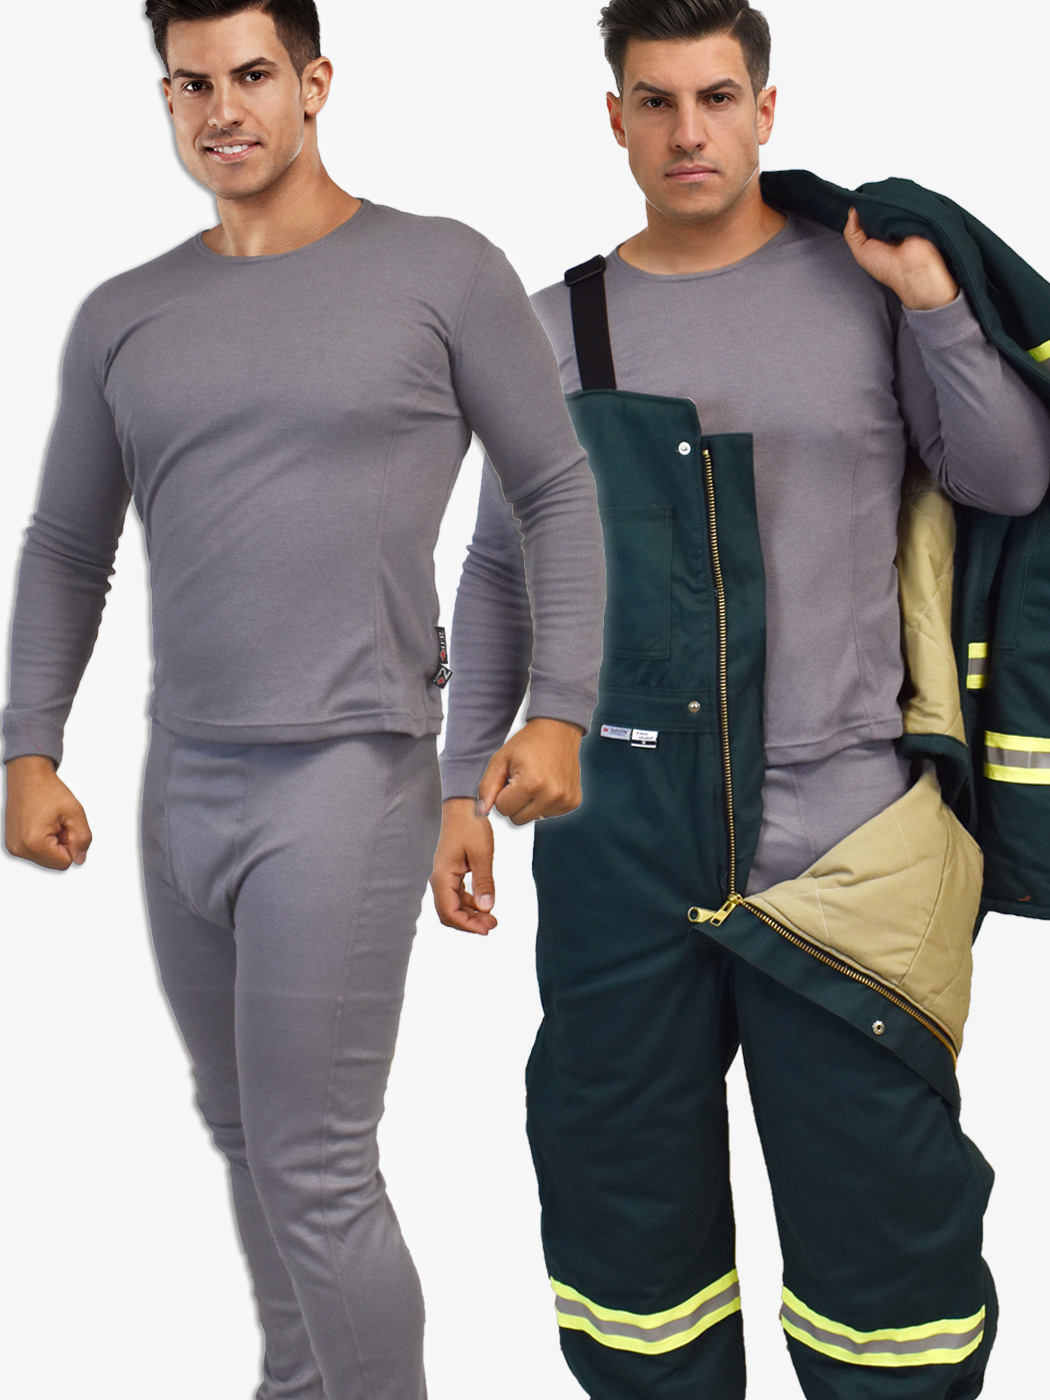 Your Winter Wardrobe Upgrade: Exploring Men's Thermal Wear – C9 Airwear